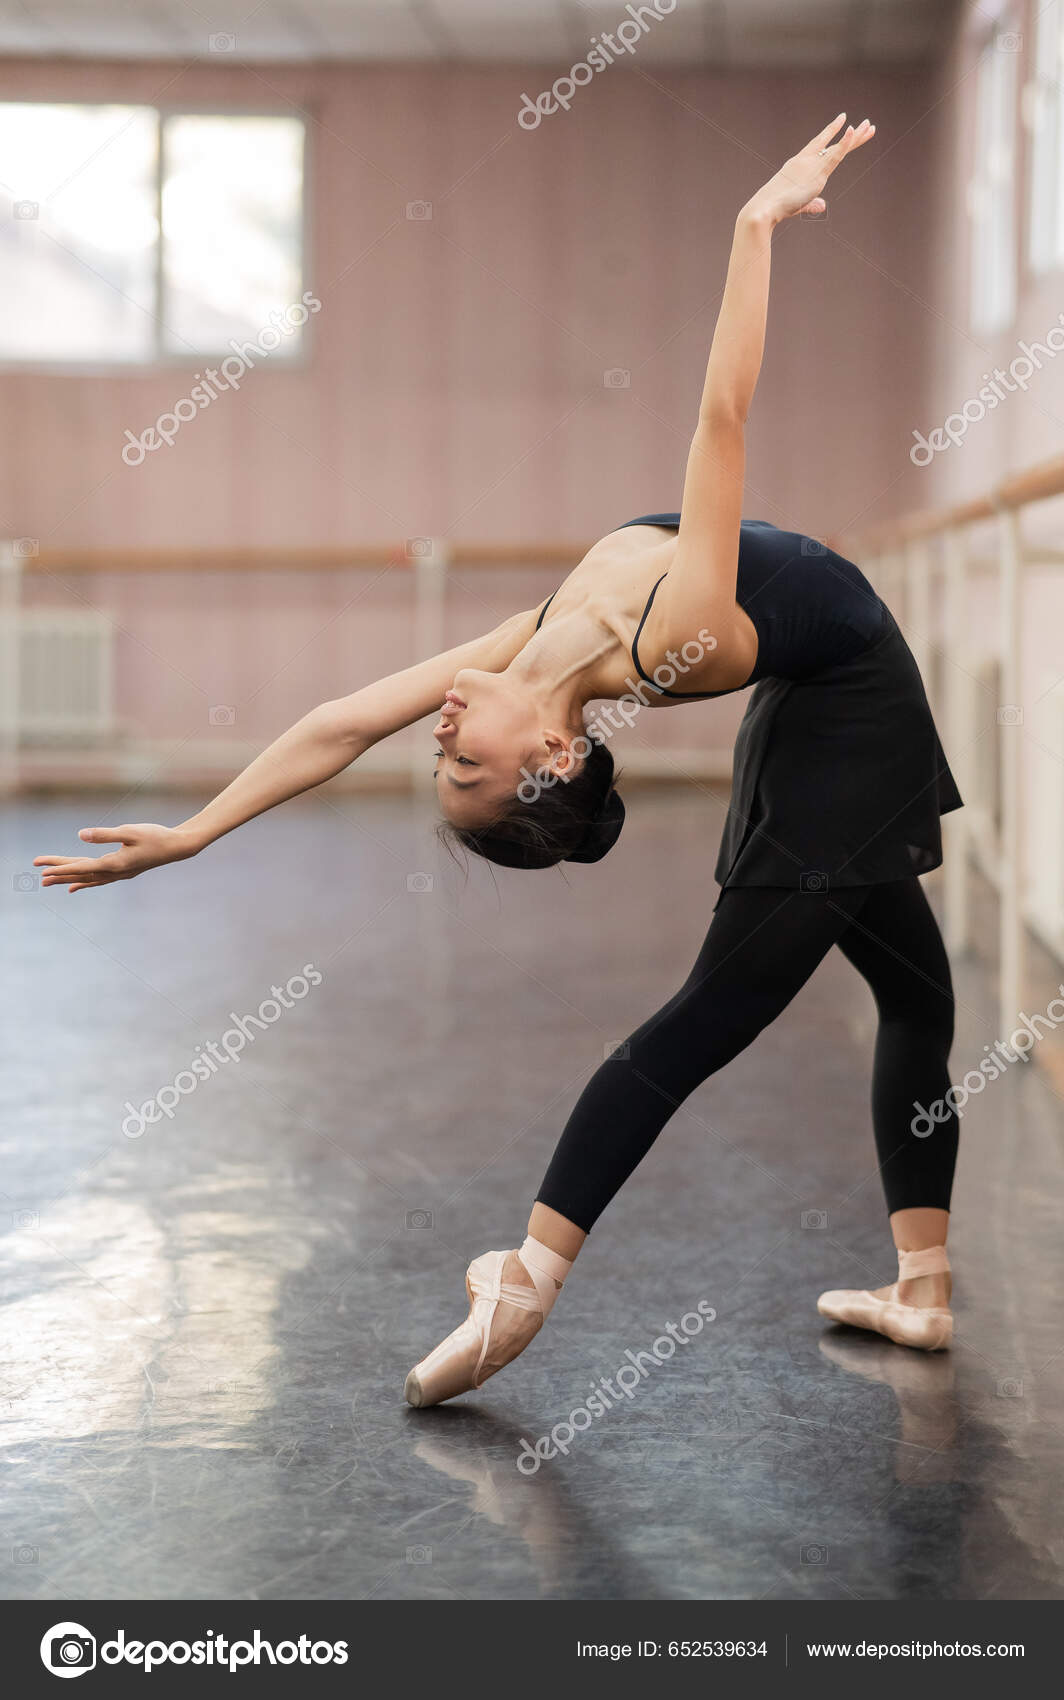 https://st5.depositphotos.com/1516574/65253/i/1600/depositphotos_652539634-stock-photo-asian-woman-doing-back-flexibility.jpg